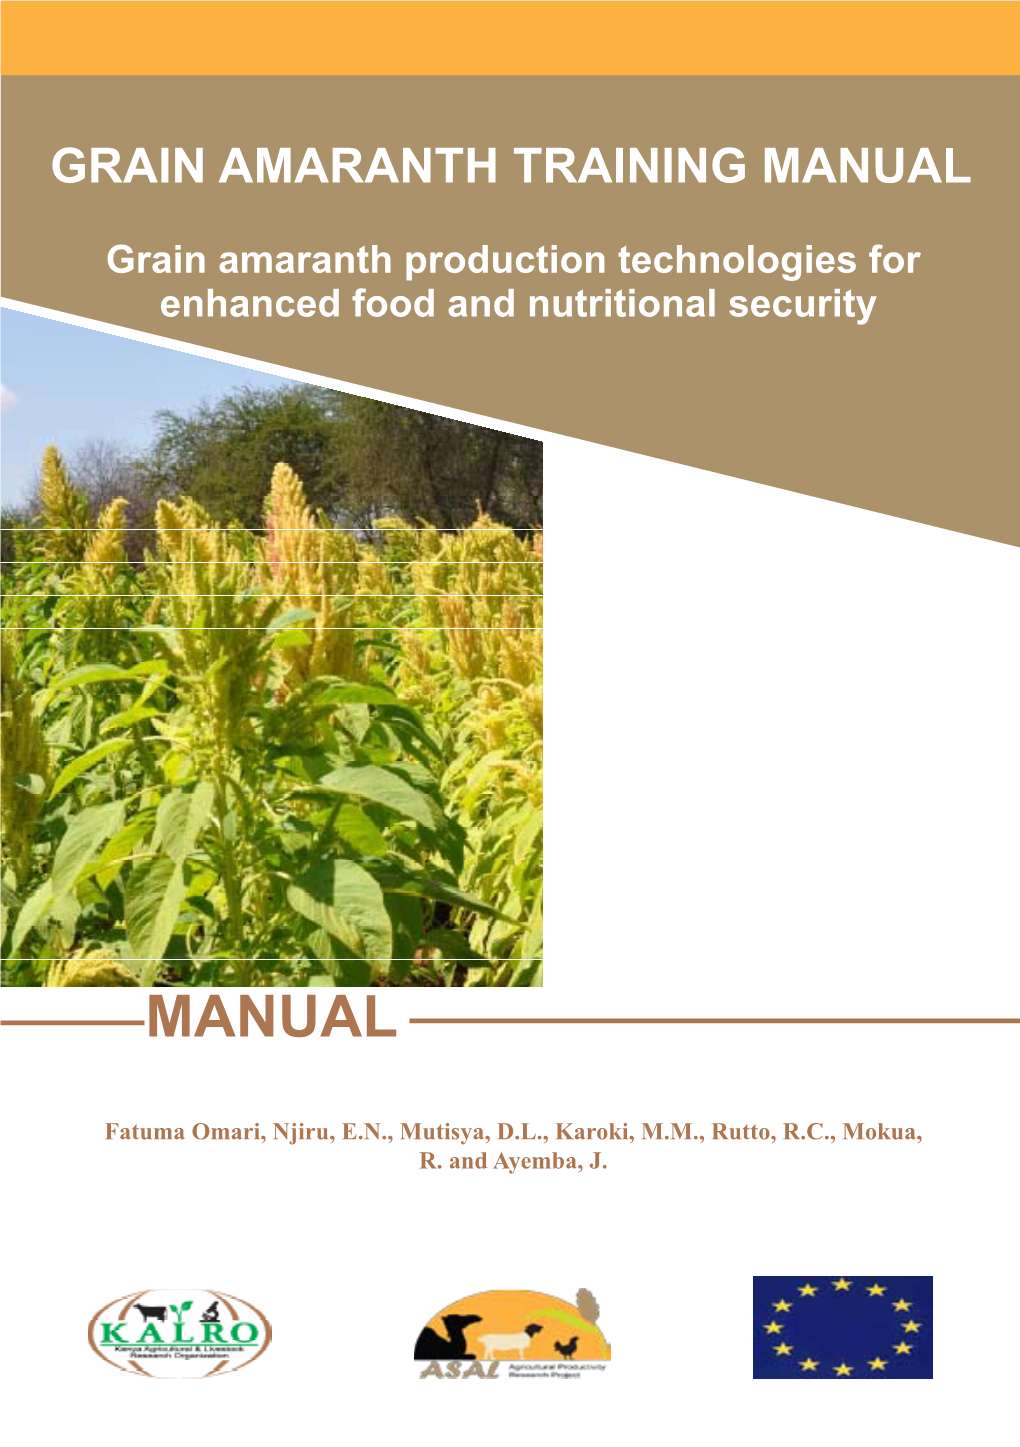 Manual Grain Amaranth Training Manual